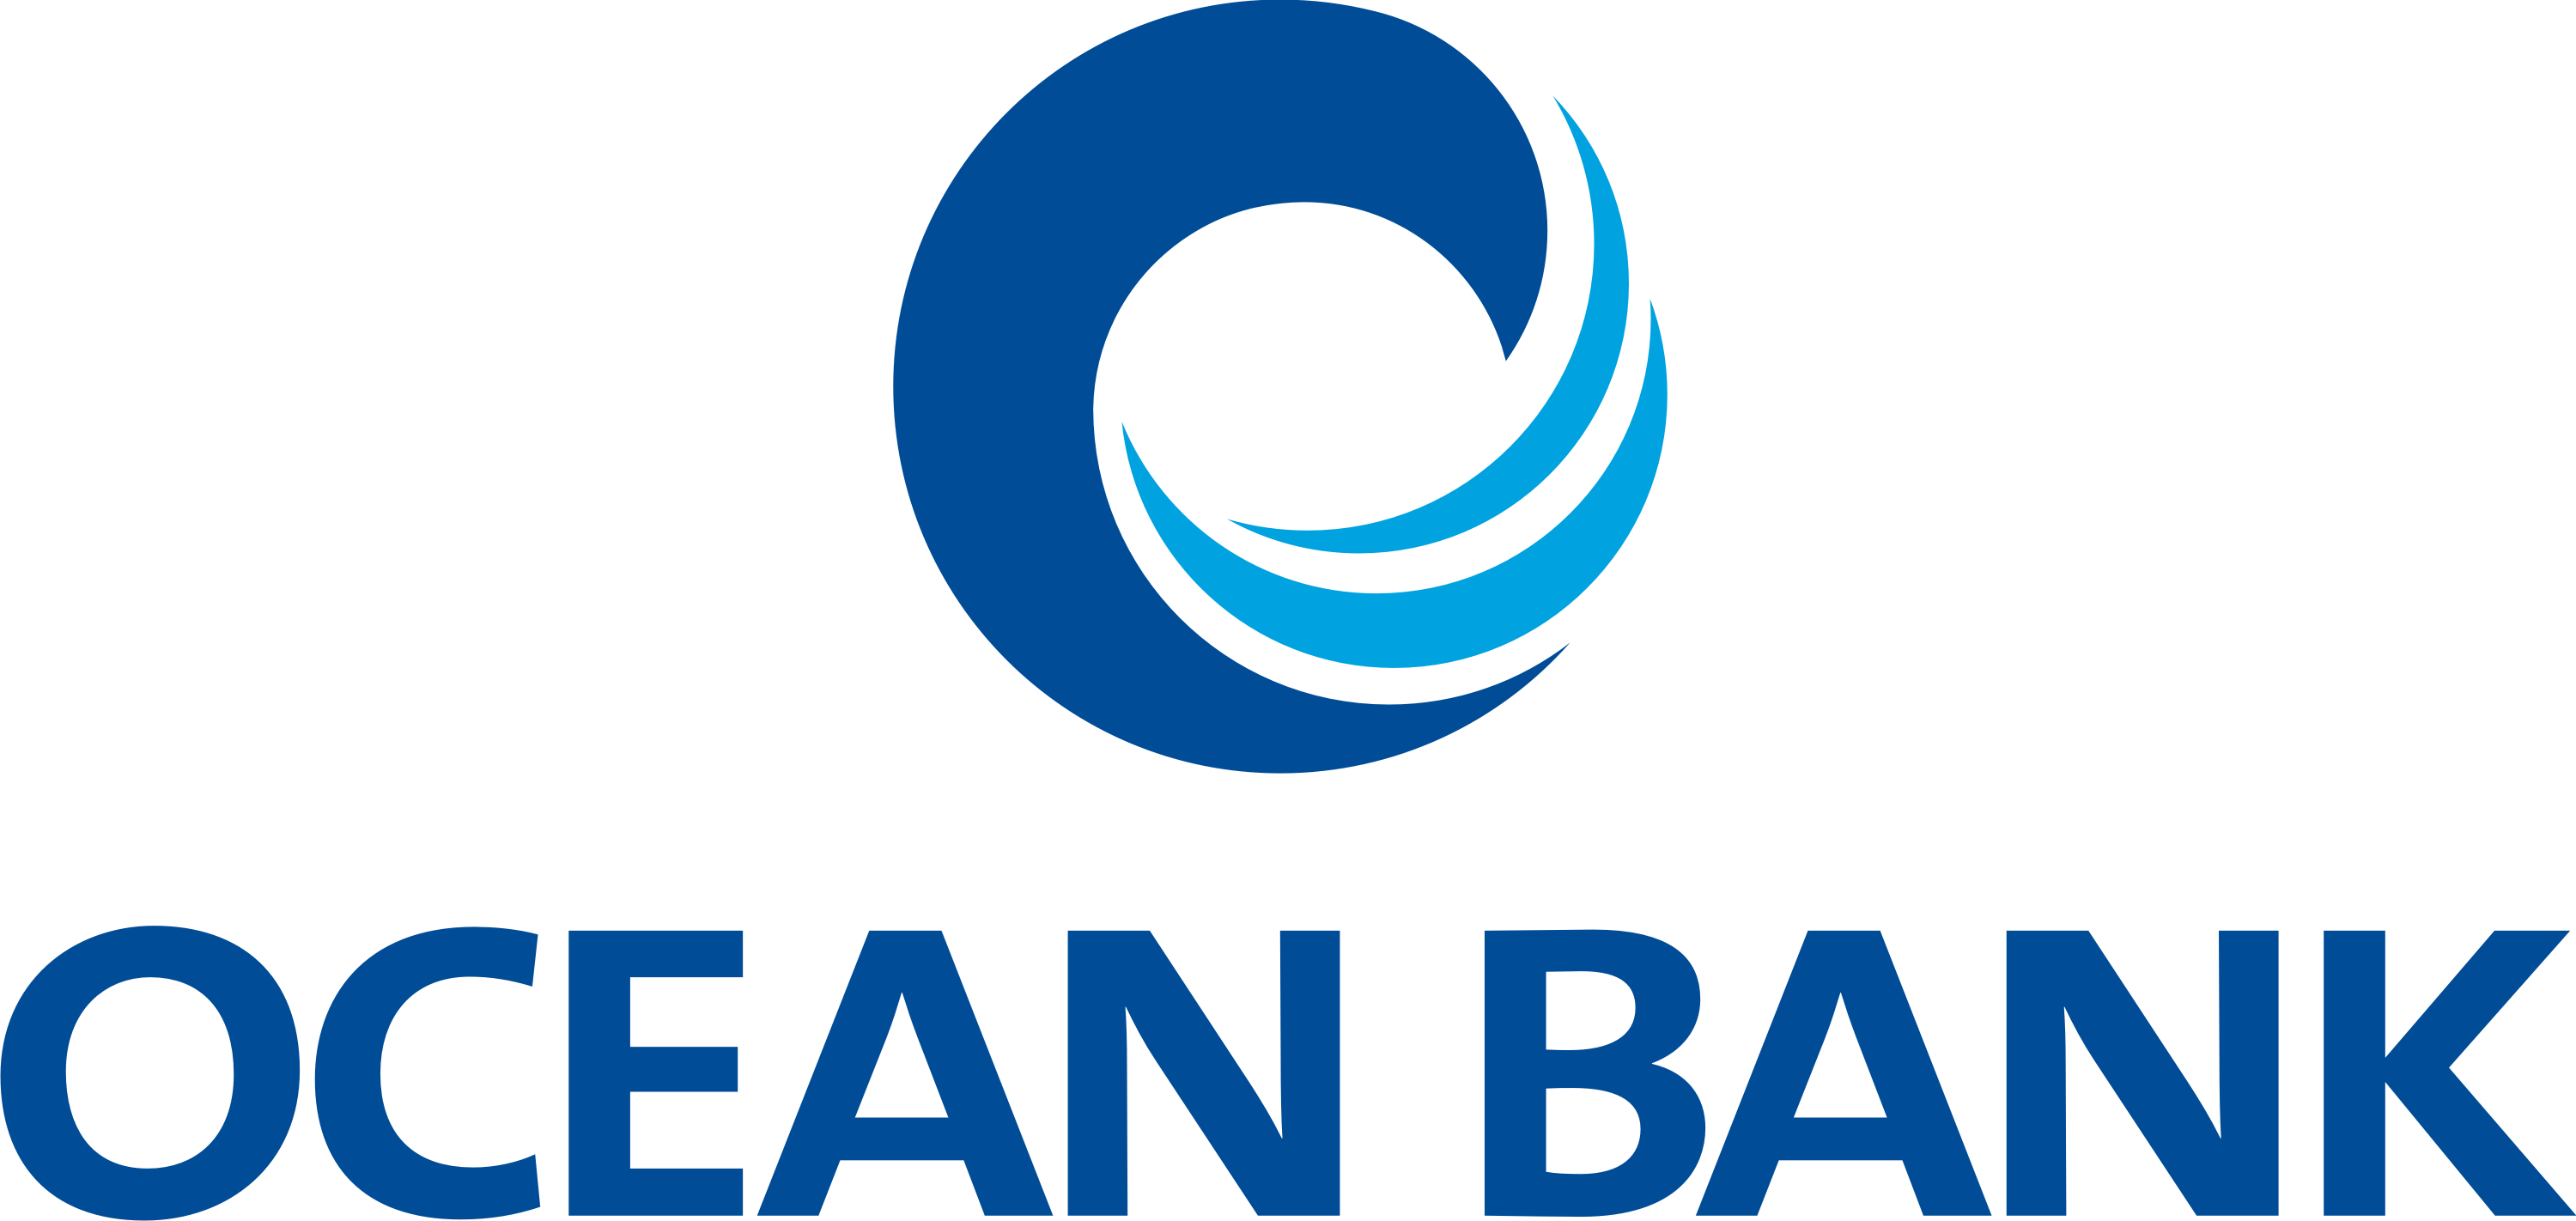 OCEAN BANK REPORTS 3